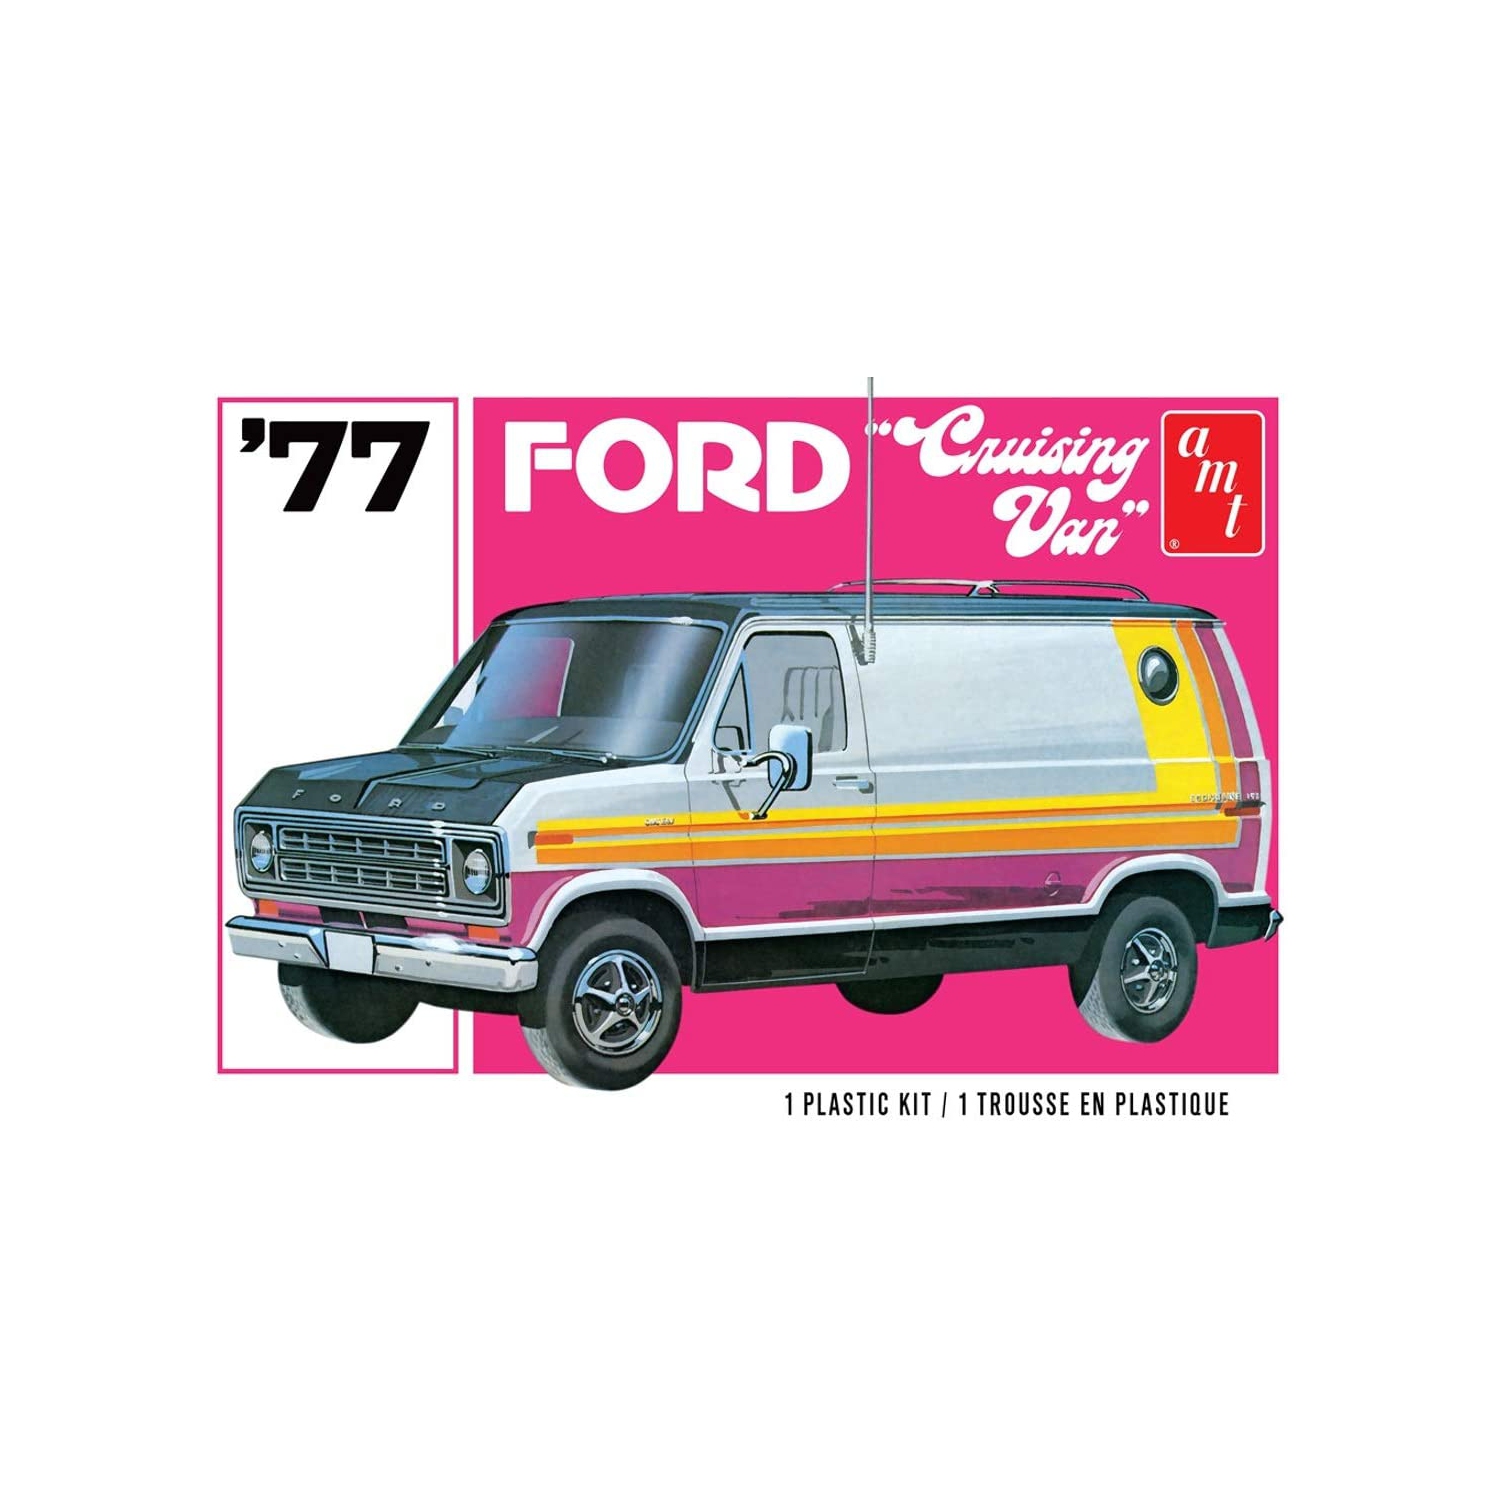 Aluminum Model Toys (AMT) '77 Ford "Cruising Van" (AMT1108) 1:25 Scale Van Plastic Model Kit